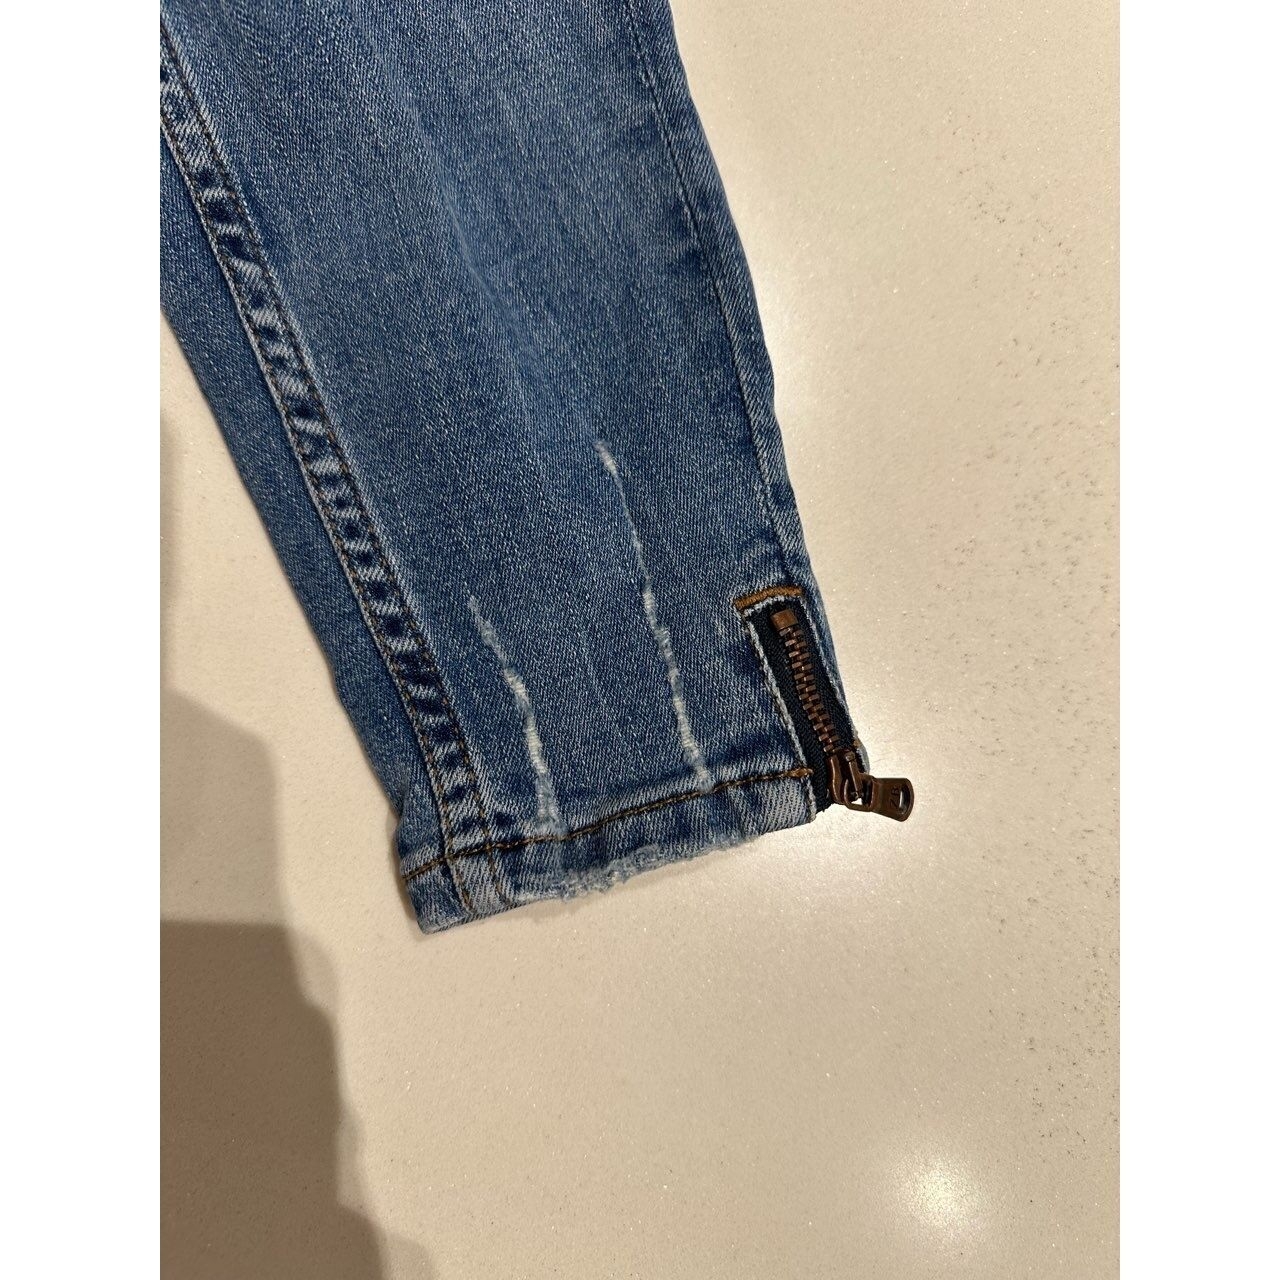 Zara Blue Mid Waist Ripped Jeans